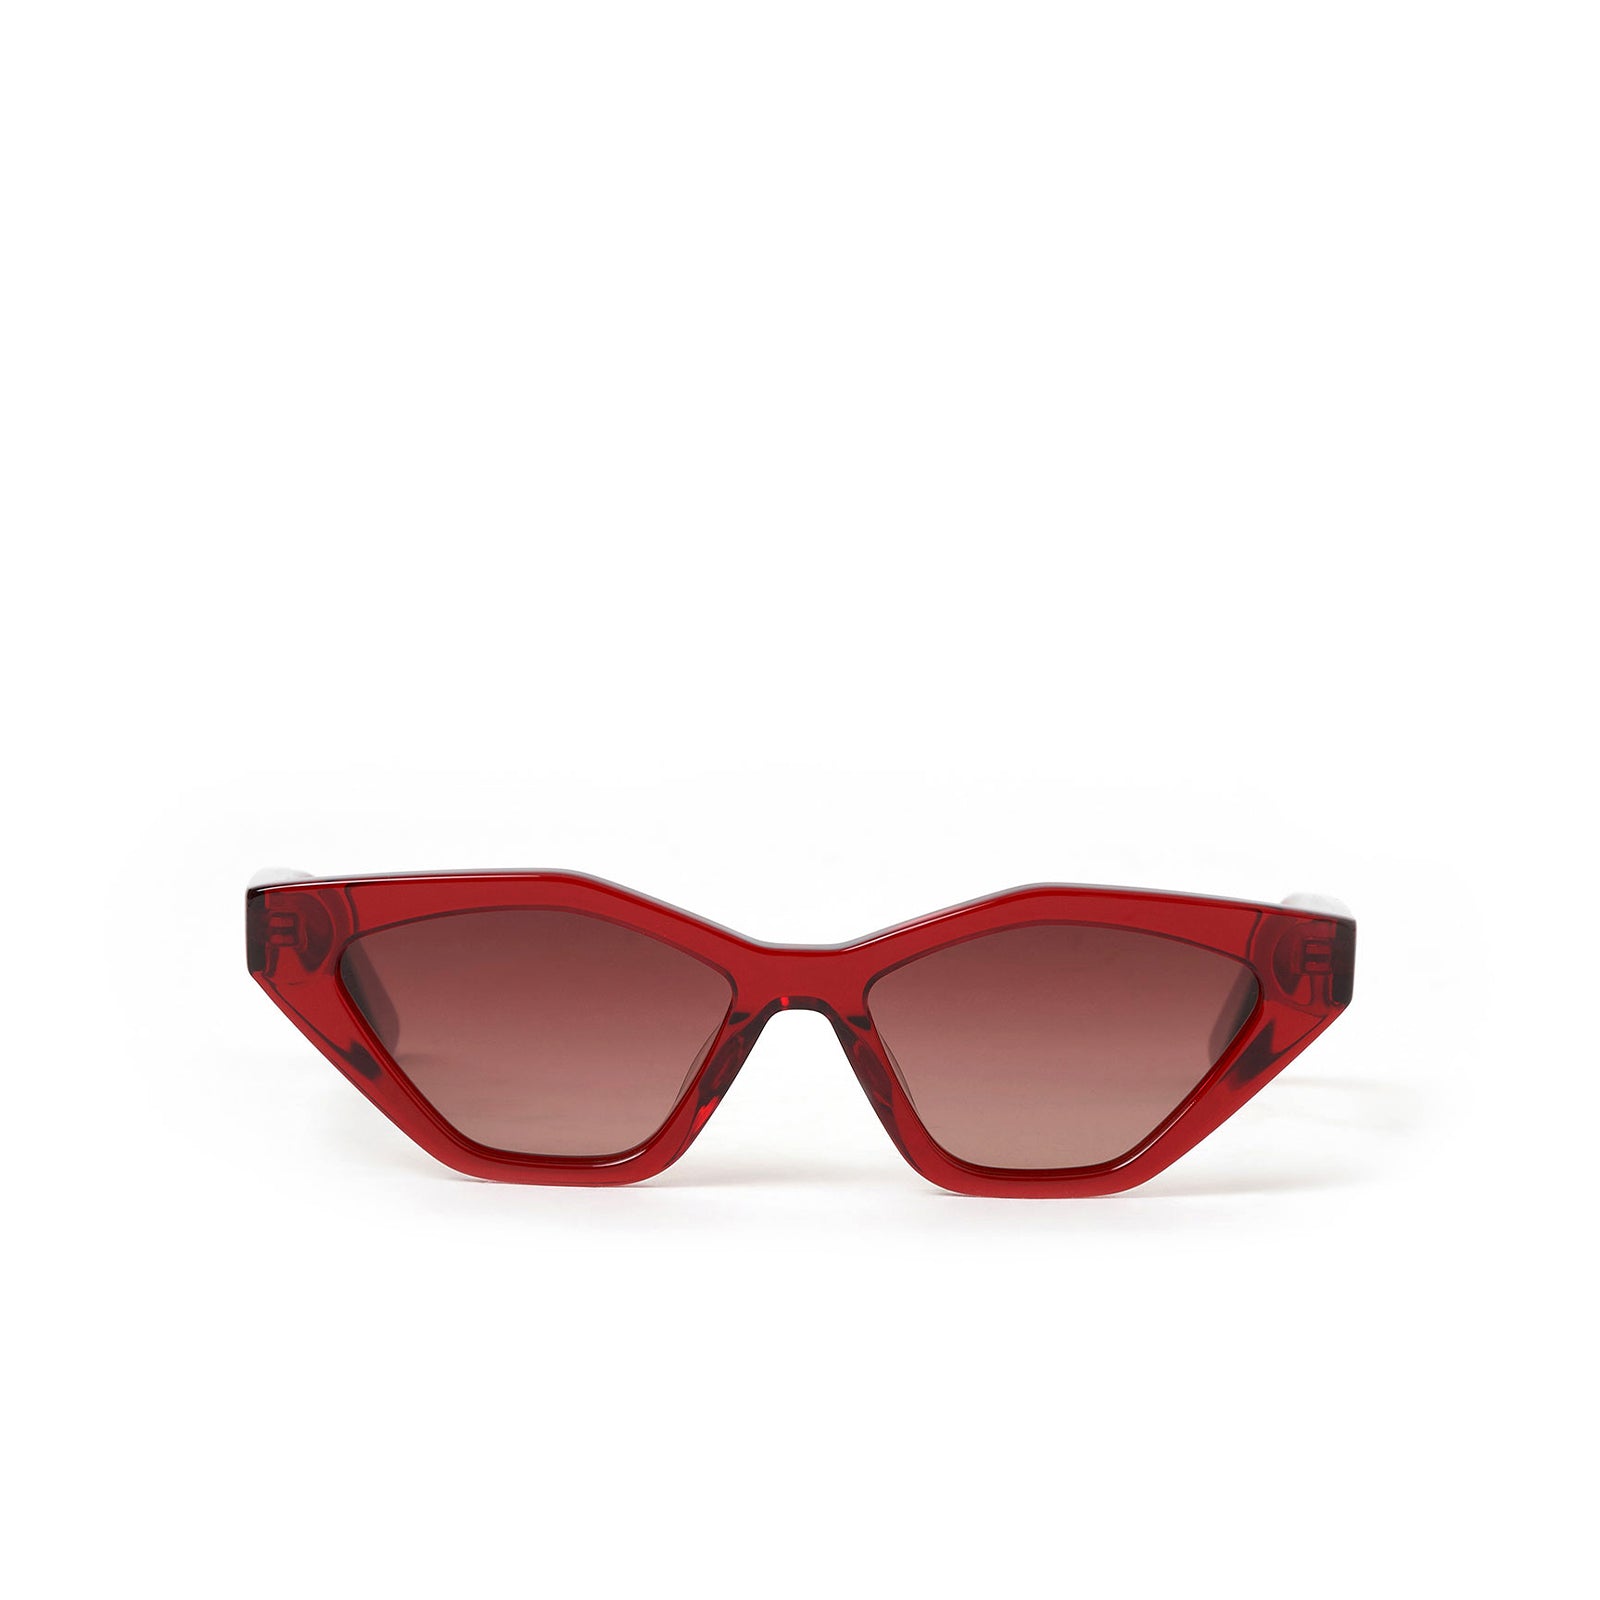 Jagger Sunglasses - Cherry Red